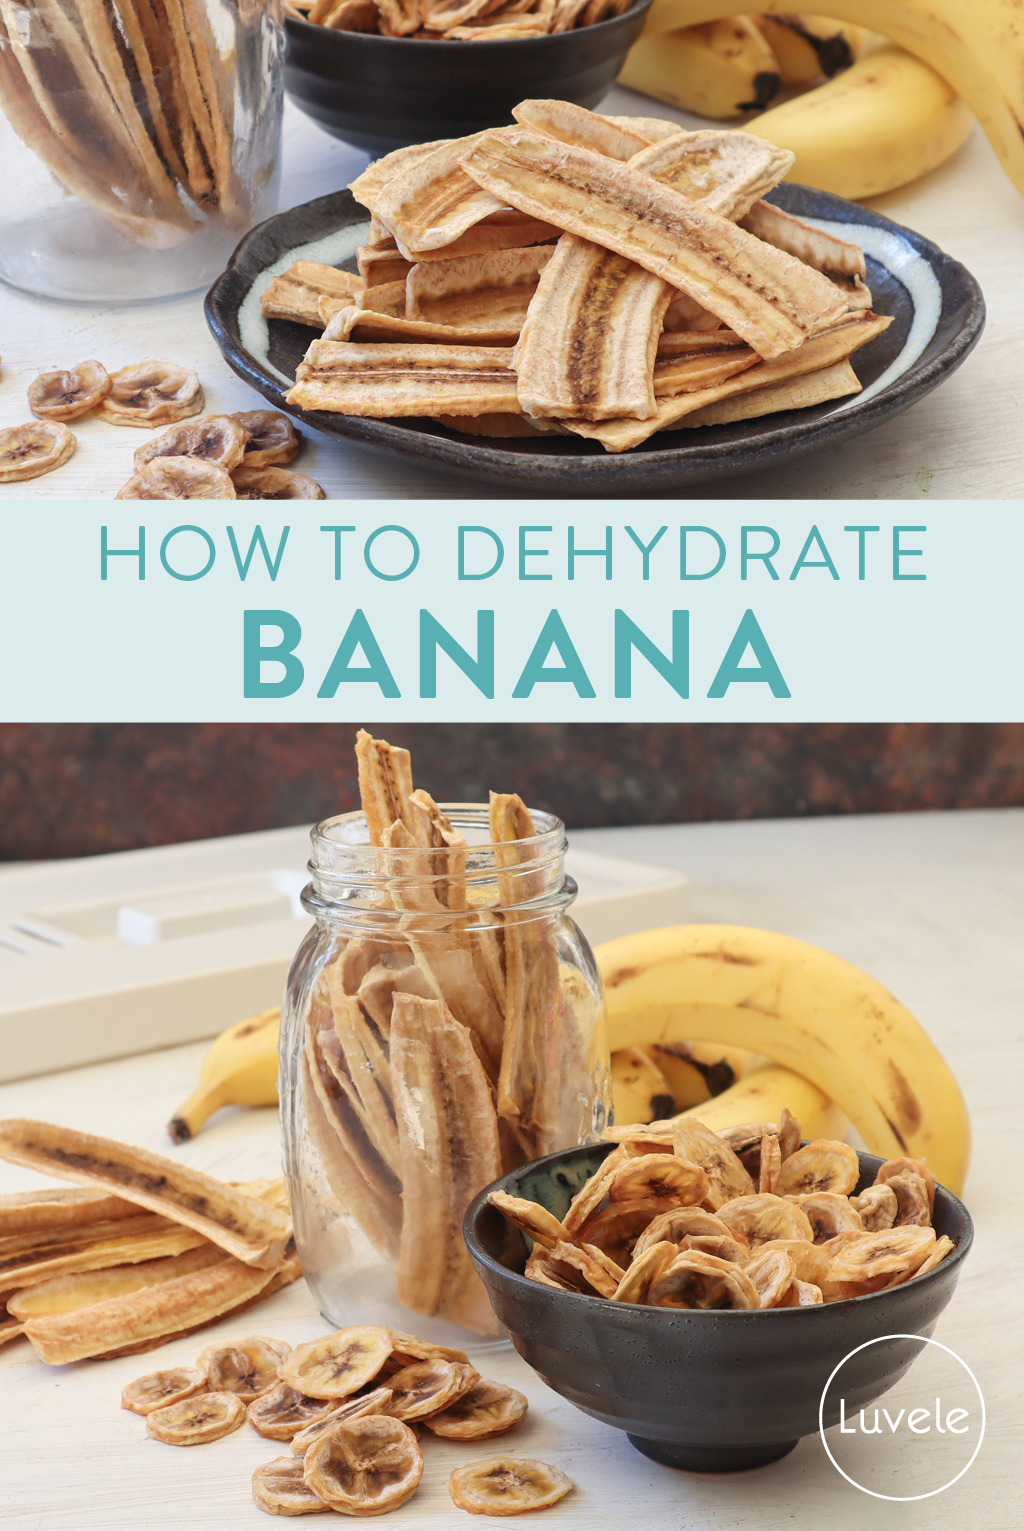 How to dehydrate banana